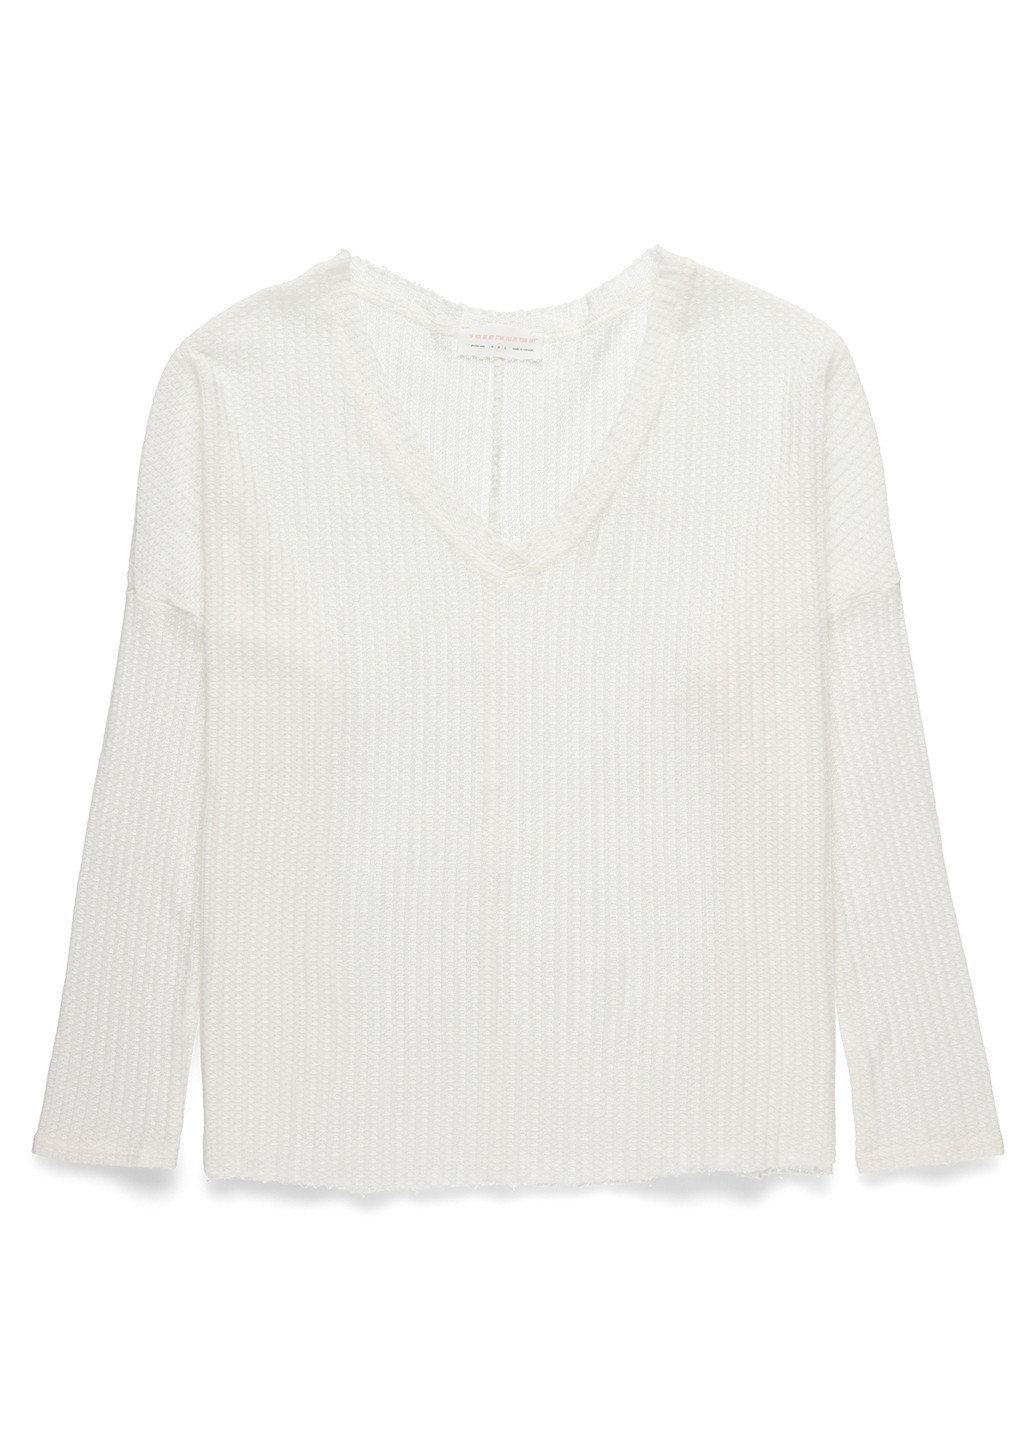 Белый демисезонный пуловер пуловер Target